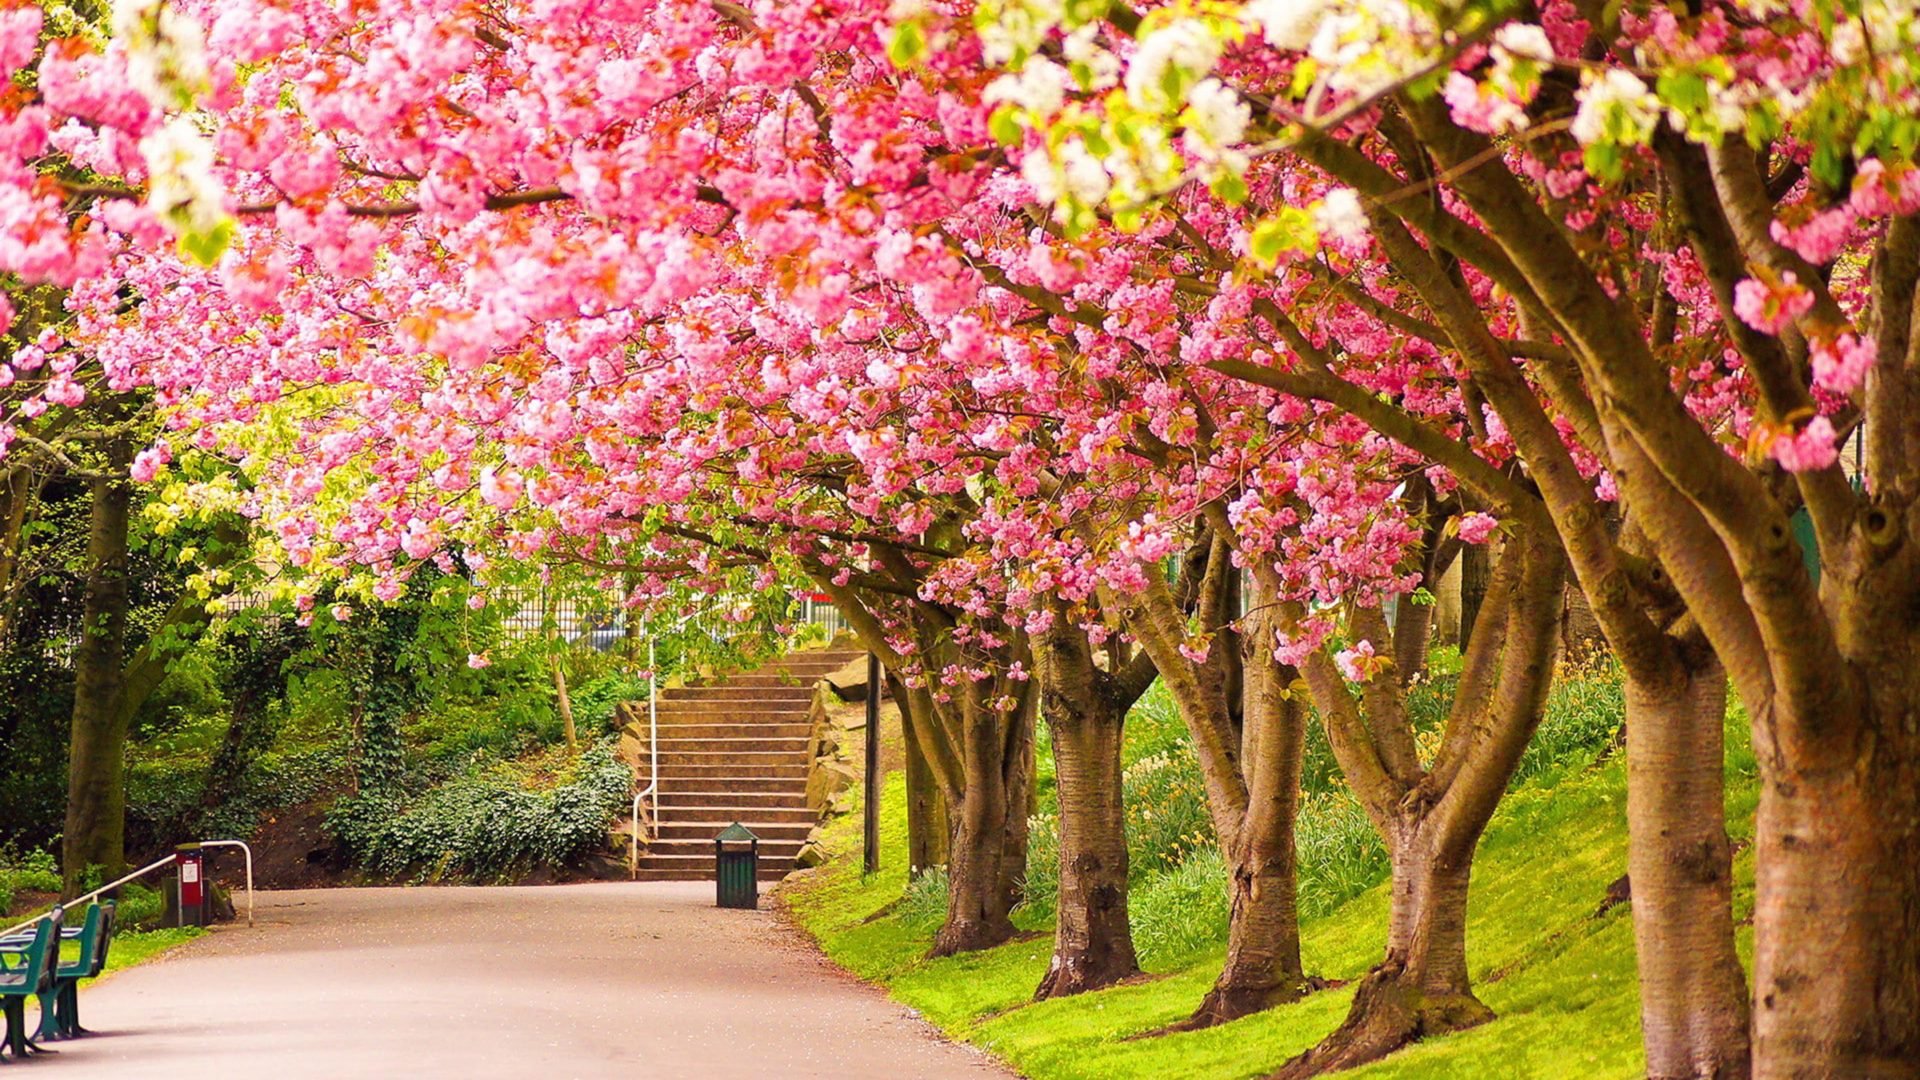 Park Blooming Trees Cherries Beautiful Spring Wallpaper HD For Desktop Tablets And Mobile Phones 3840x2400, Wallpaper13.com